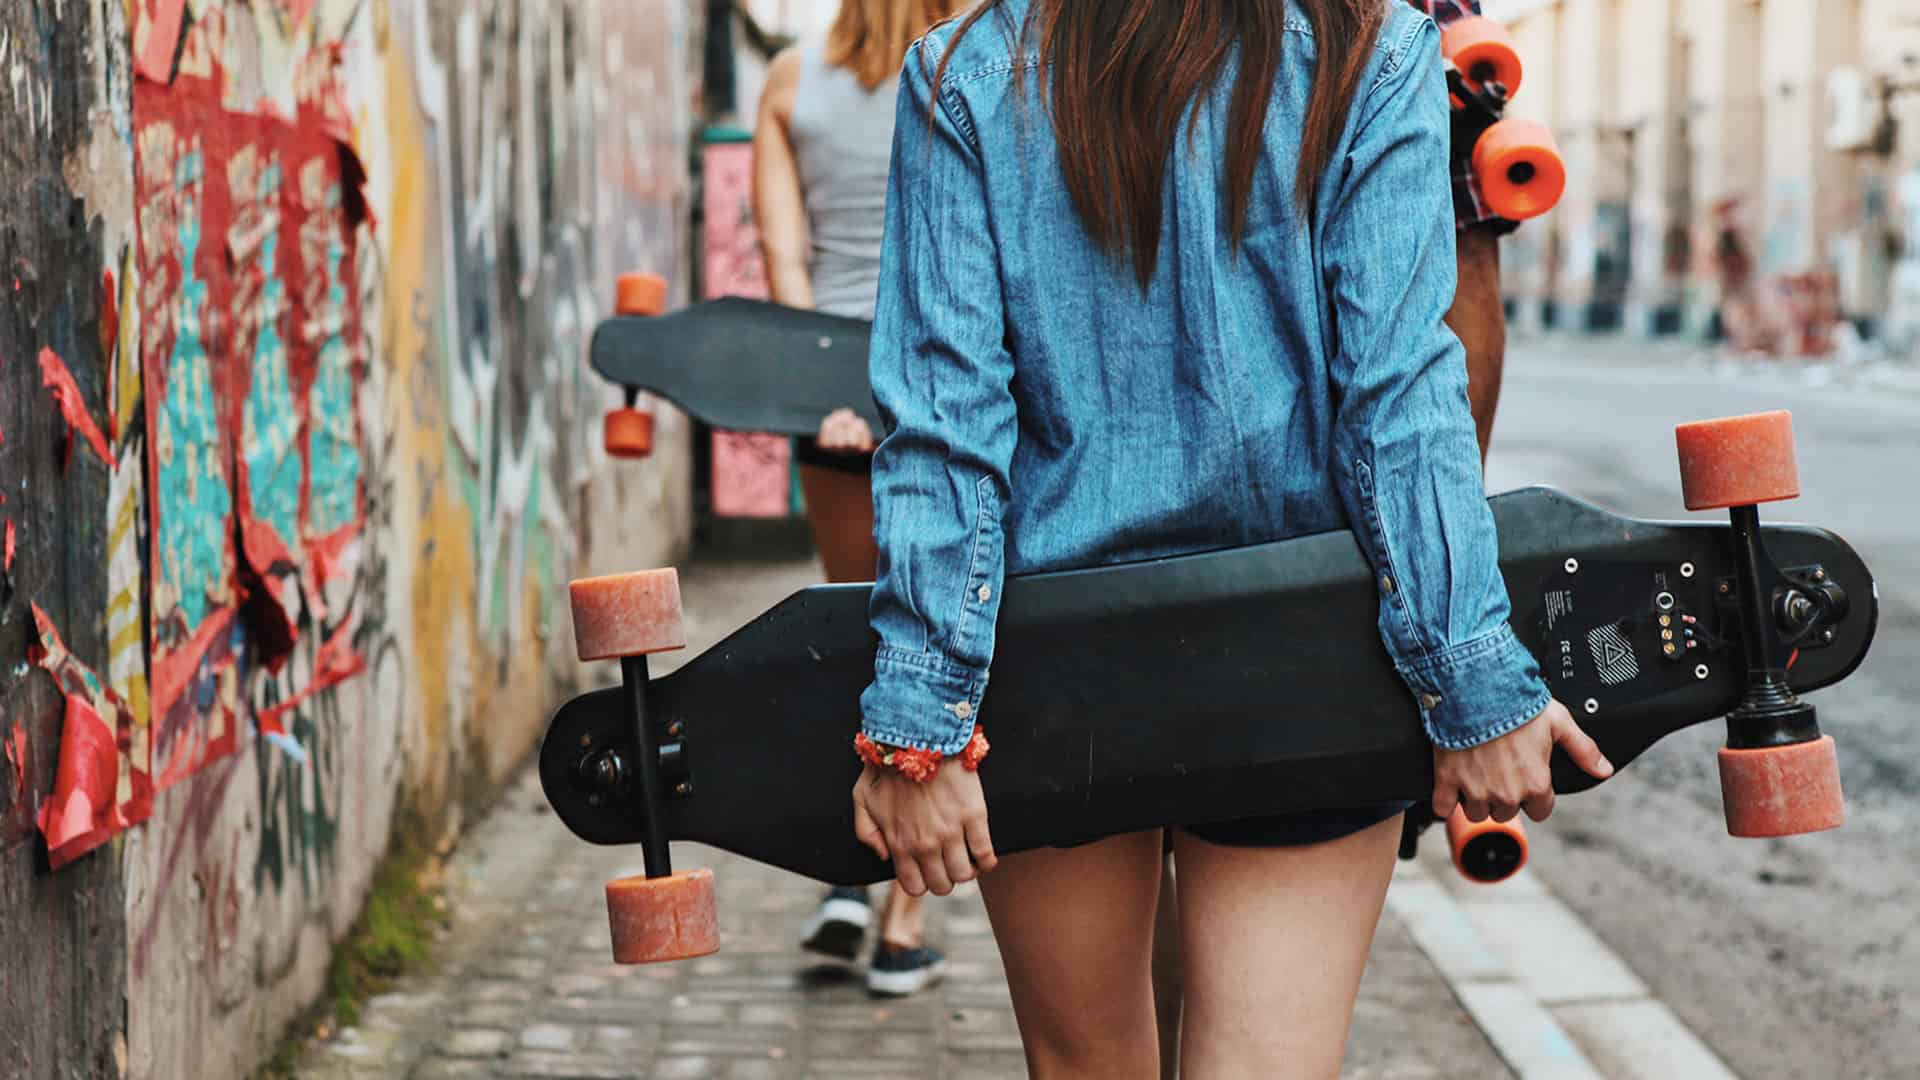 Stary Board - electric skateboard